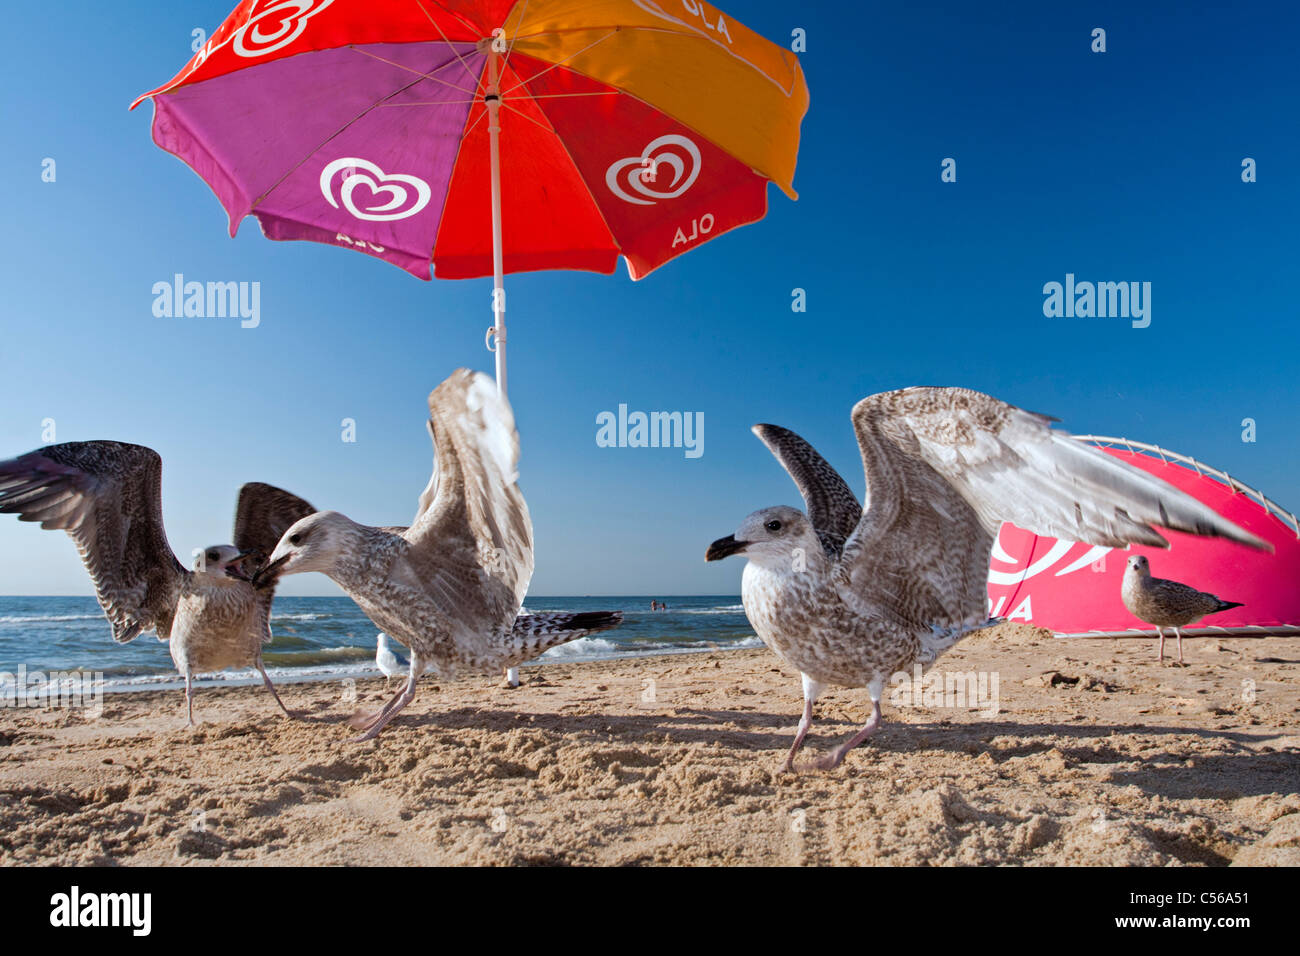 The Netherlands, Zandvoort, Seagulls on beach under parasol. Stock Photo